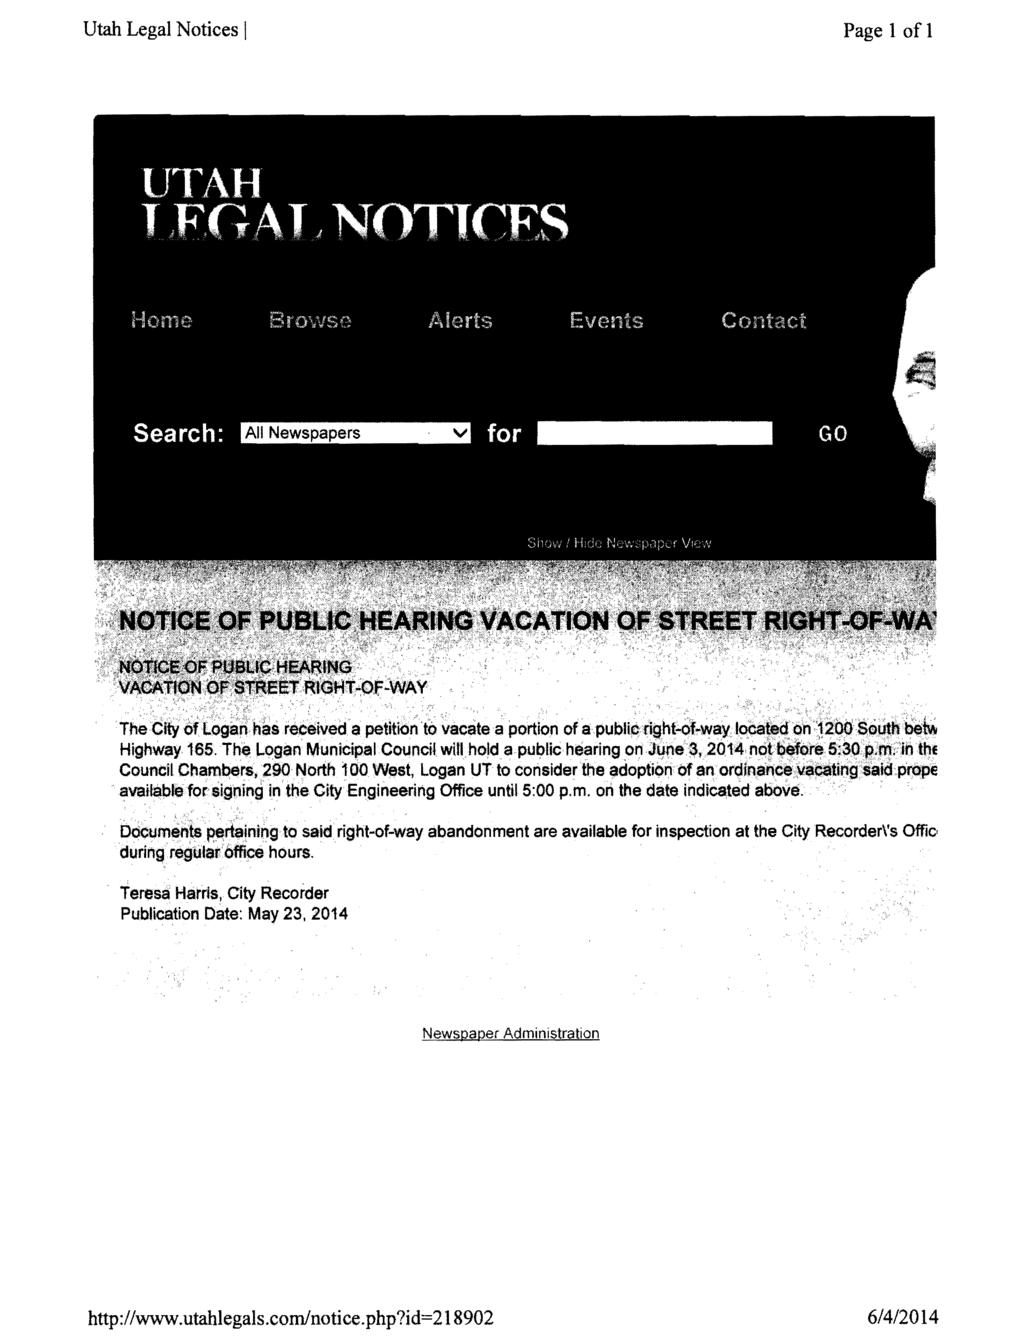 Utah Legal Notices I Page 1 of 1 Th~ dfy a'ttg~~ h~s rec&ived a petttk>~ i~ vacate a portk,n. of a publi~ ri~ht-of-way. lqca~qji~'.;12~ S~$h ~t'h Highway 165.